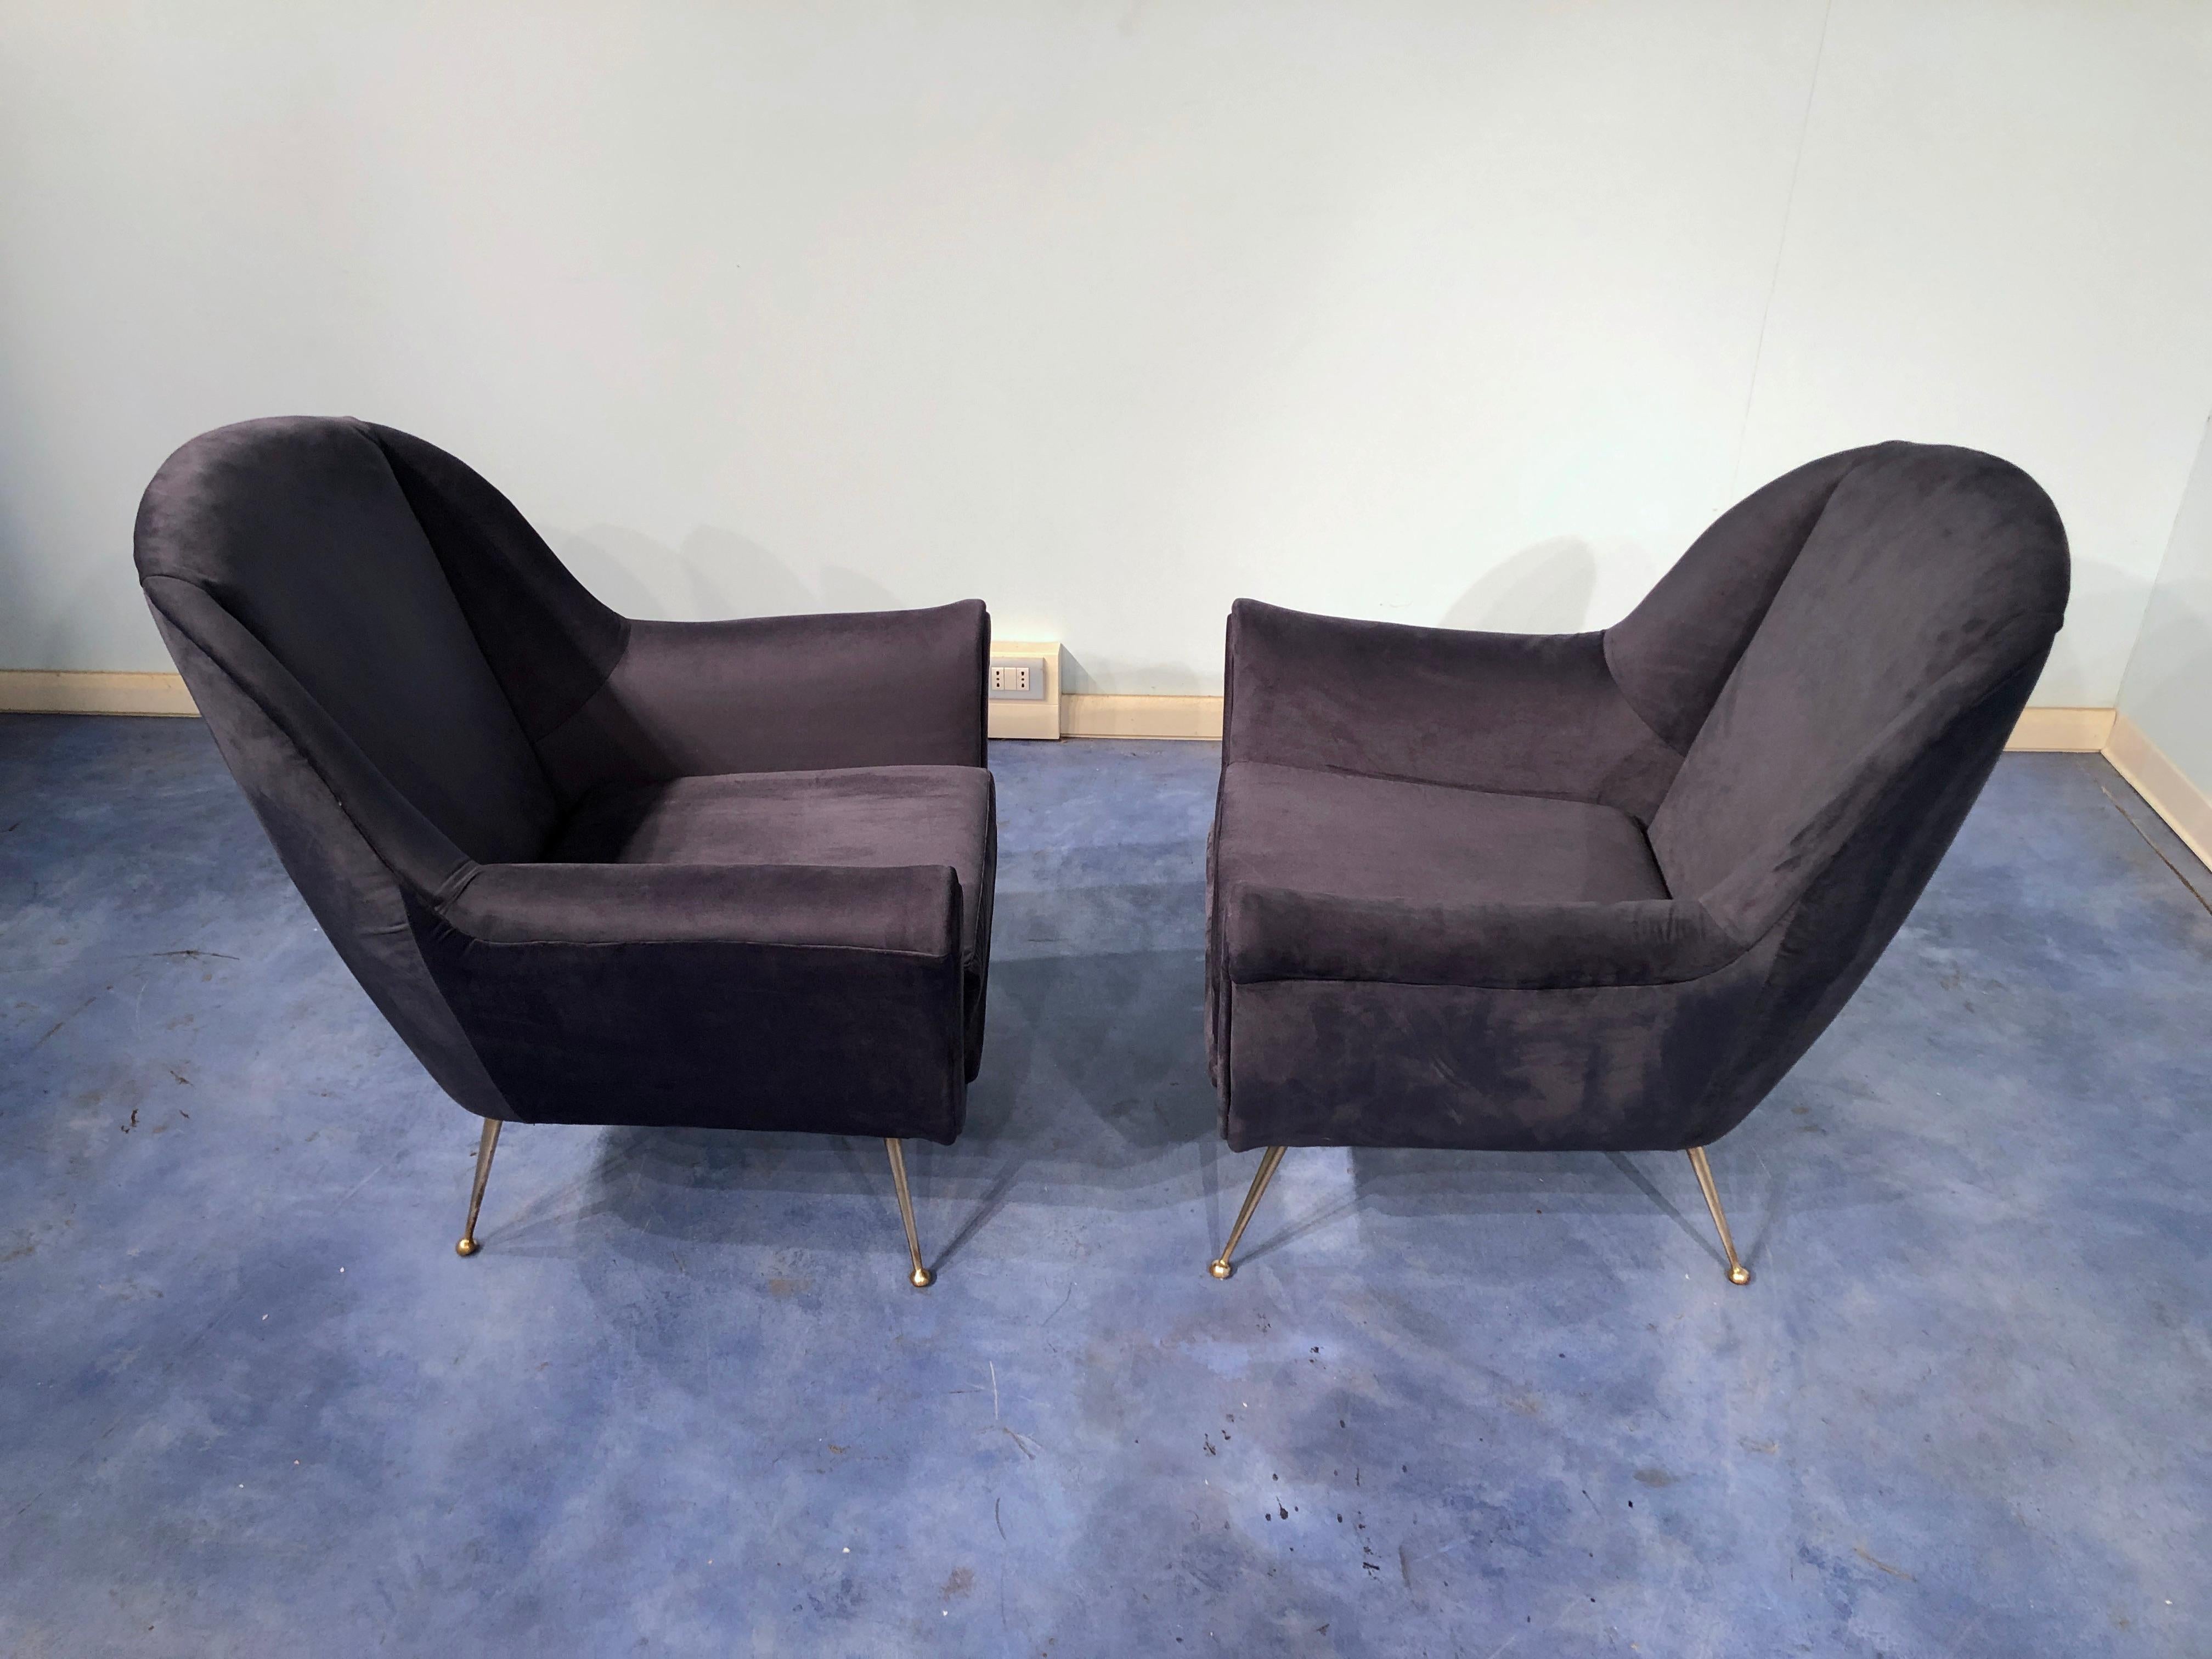 Pair of Italian Midcentury Midnight Blue Velvet Armchairs, Gio Ponti Style 1950s For Sale 1